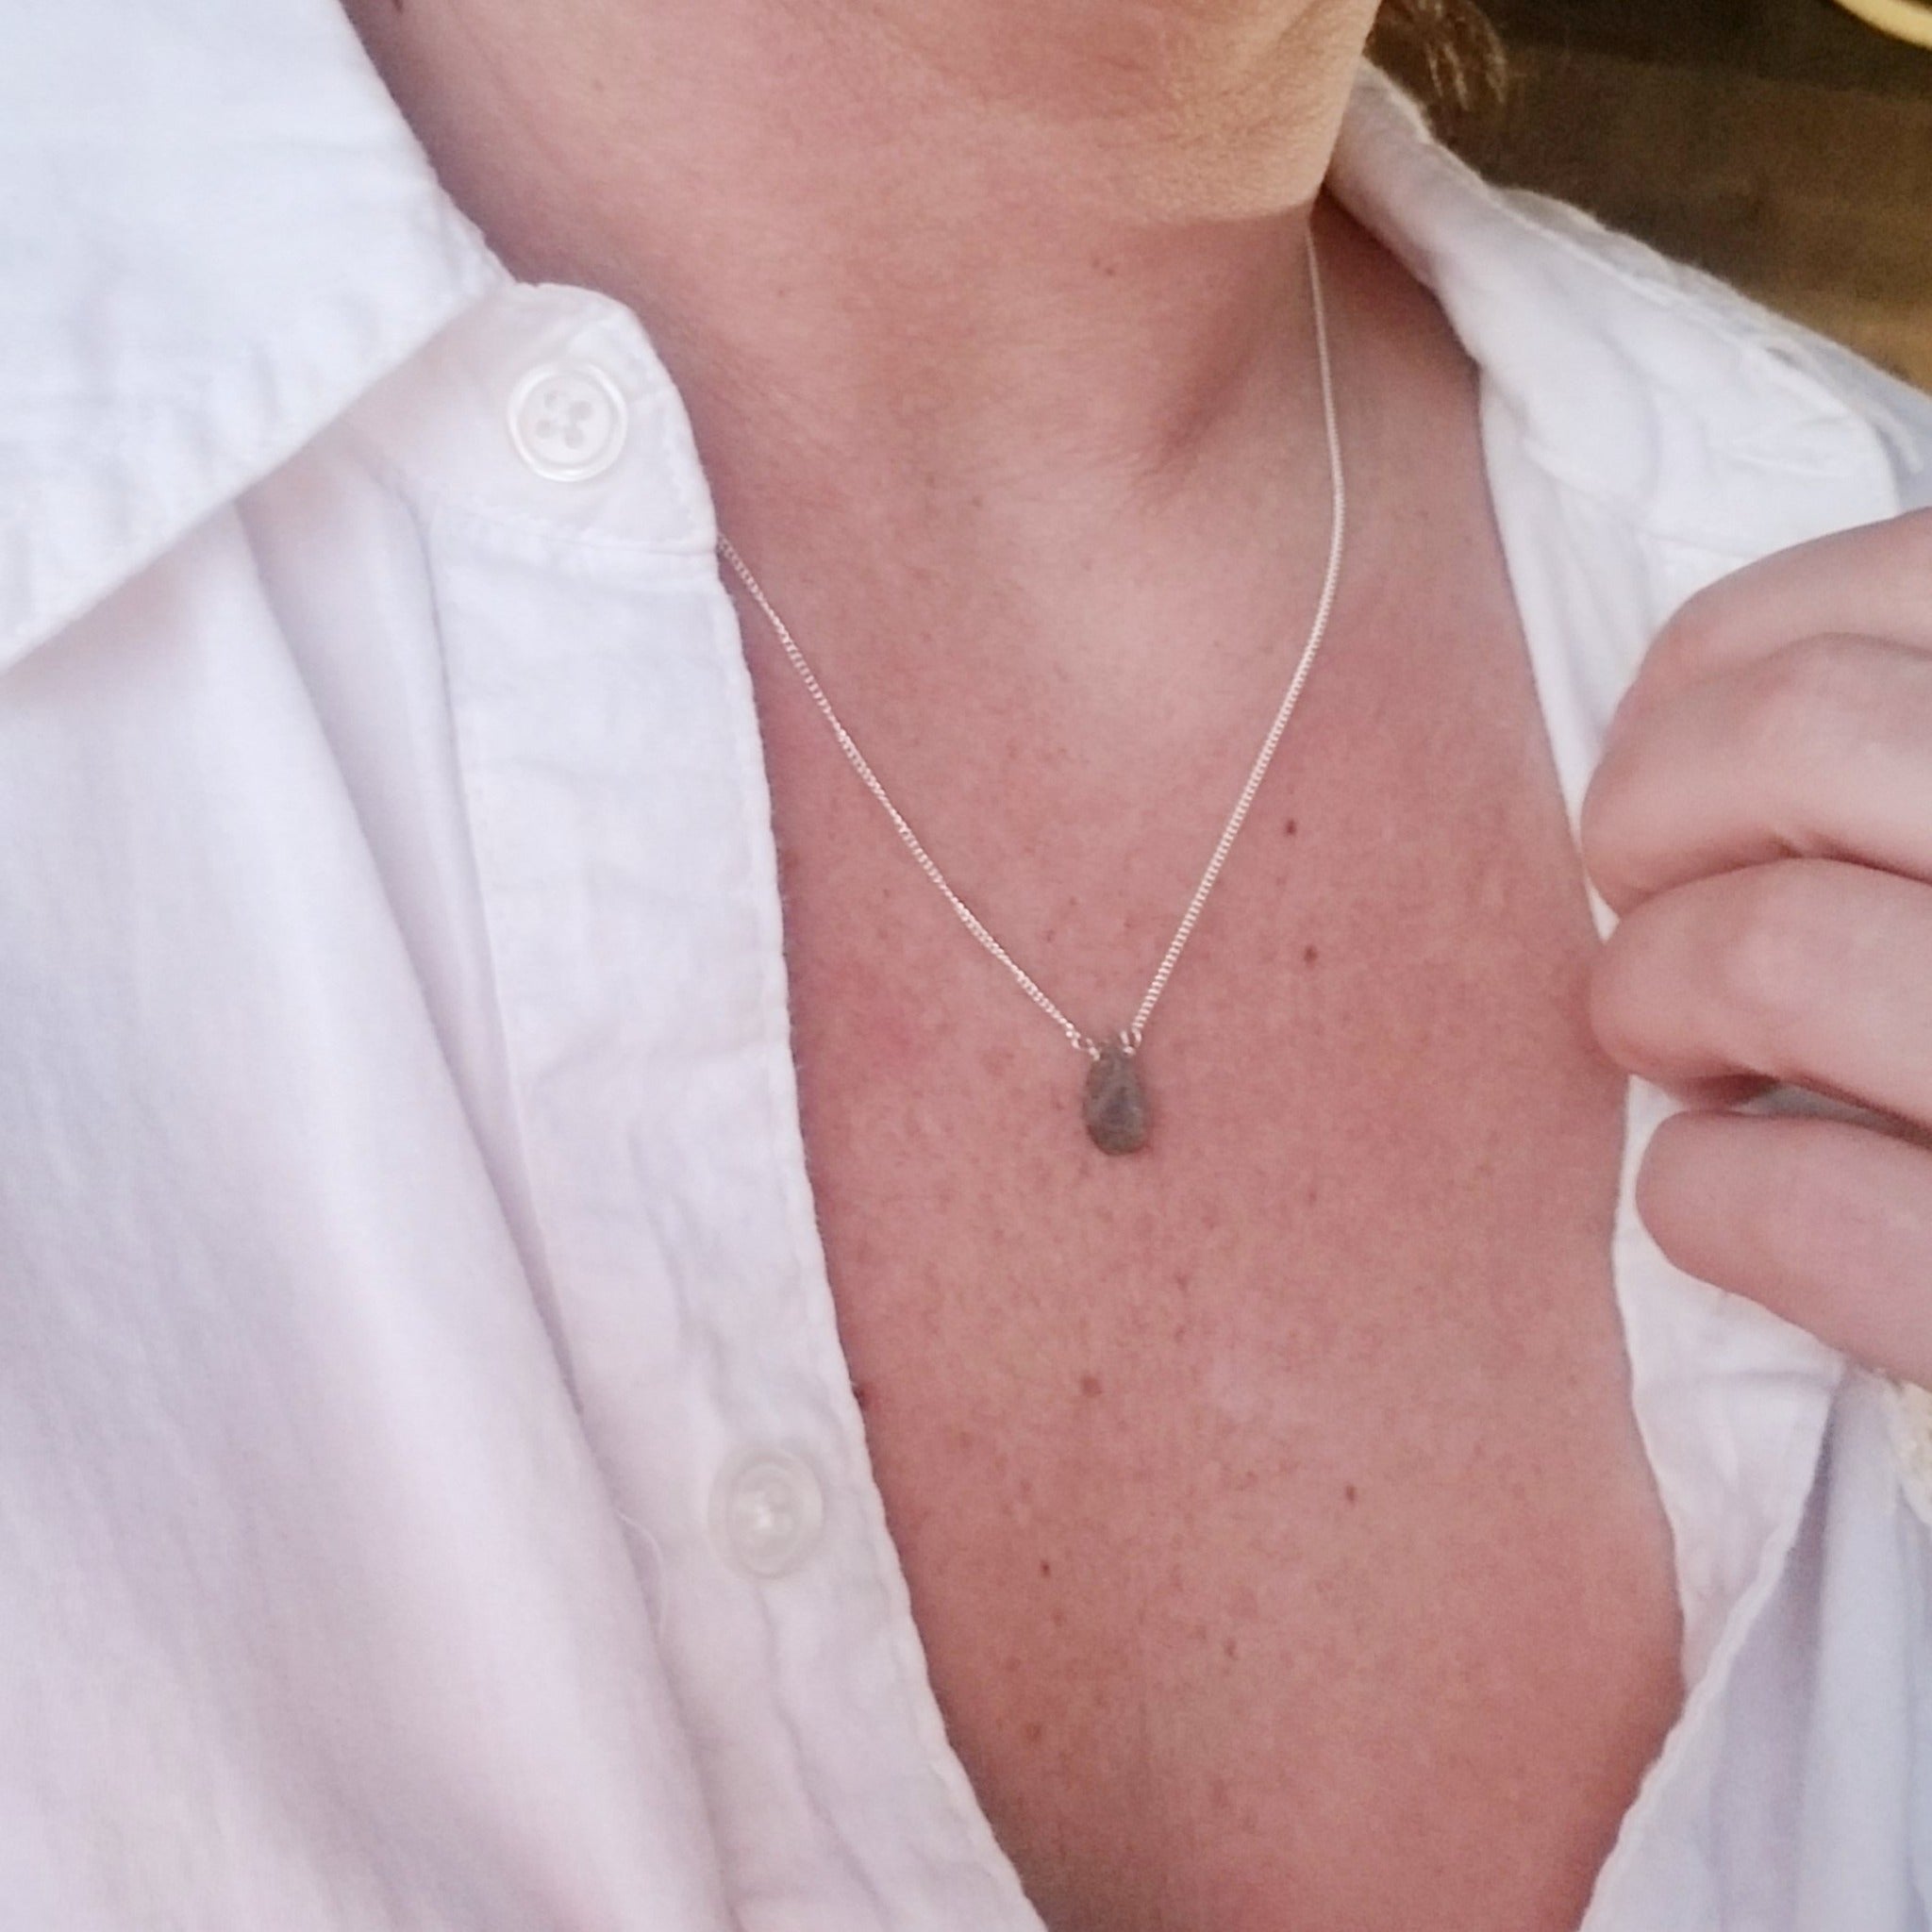 Natural Labradorite Necklace - Sterling or Gold